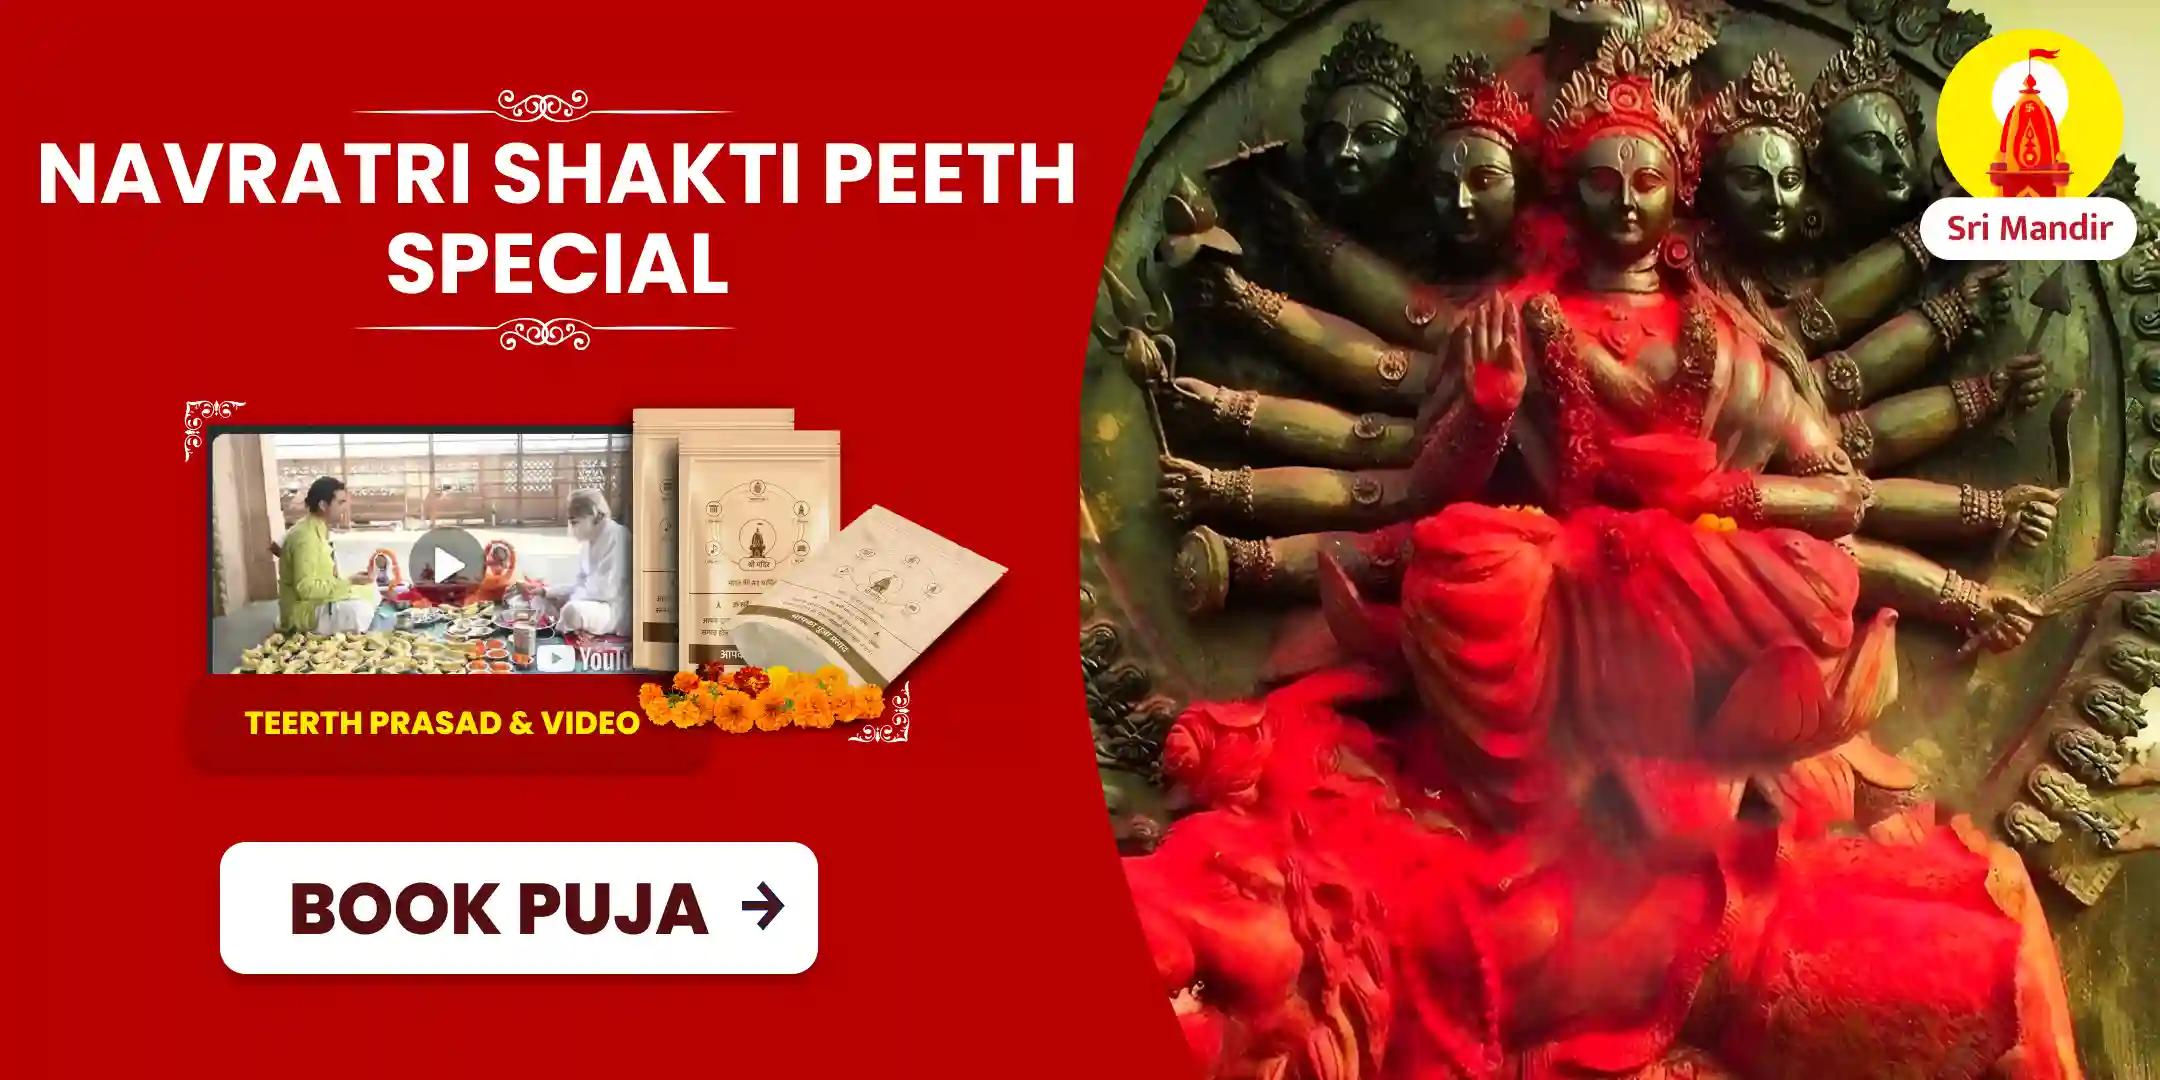 Navratri Shakti Peeth Special Maa Kamakhya Siddhi Yagya For Attaining Mental and Physical Strength